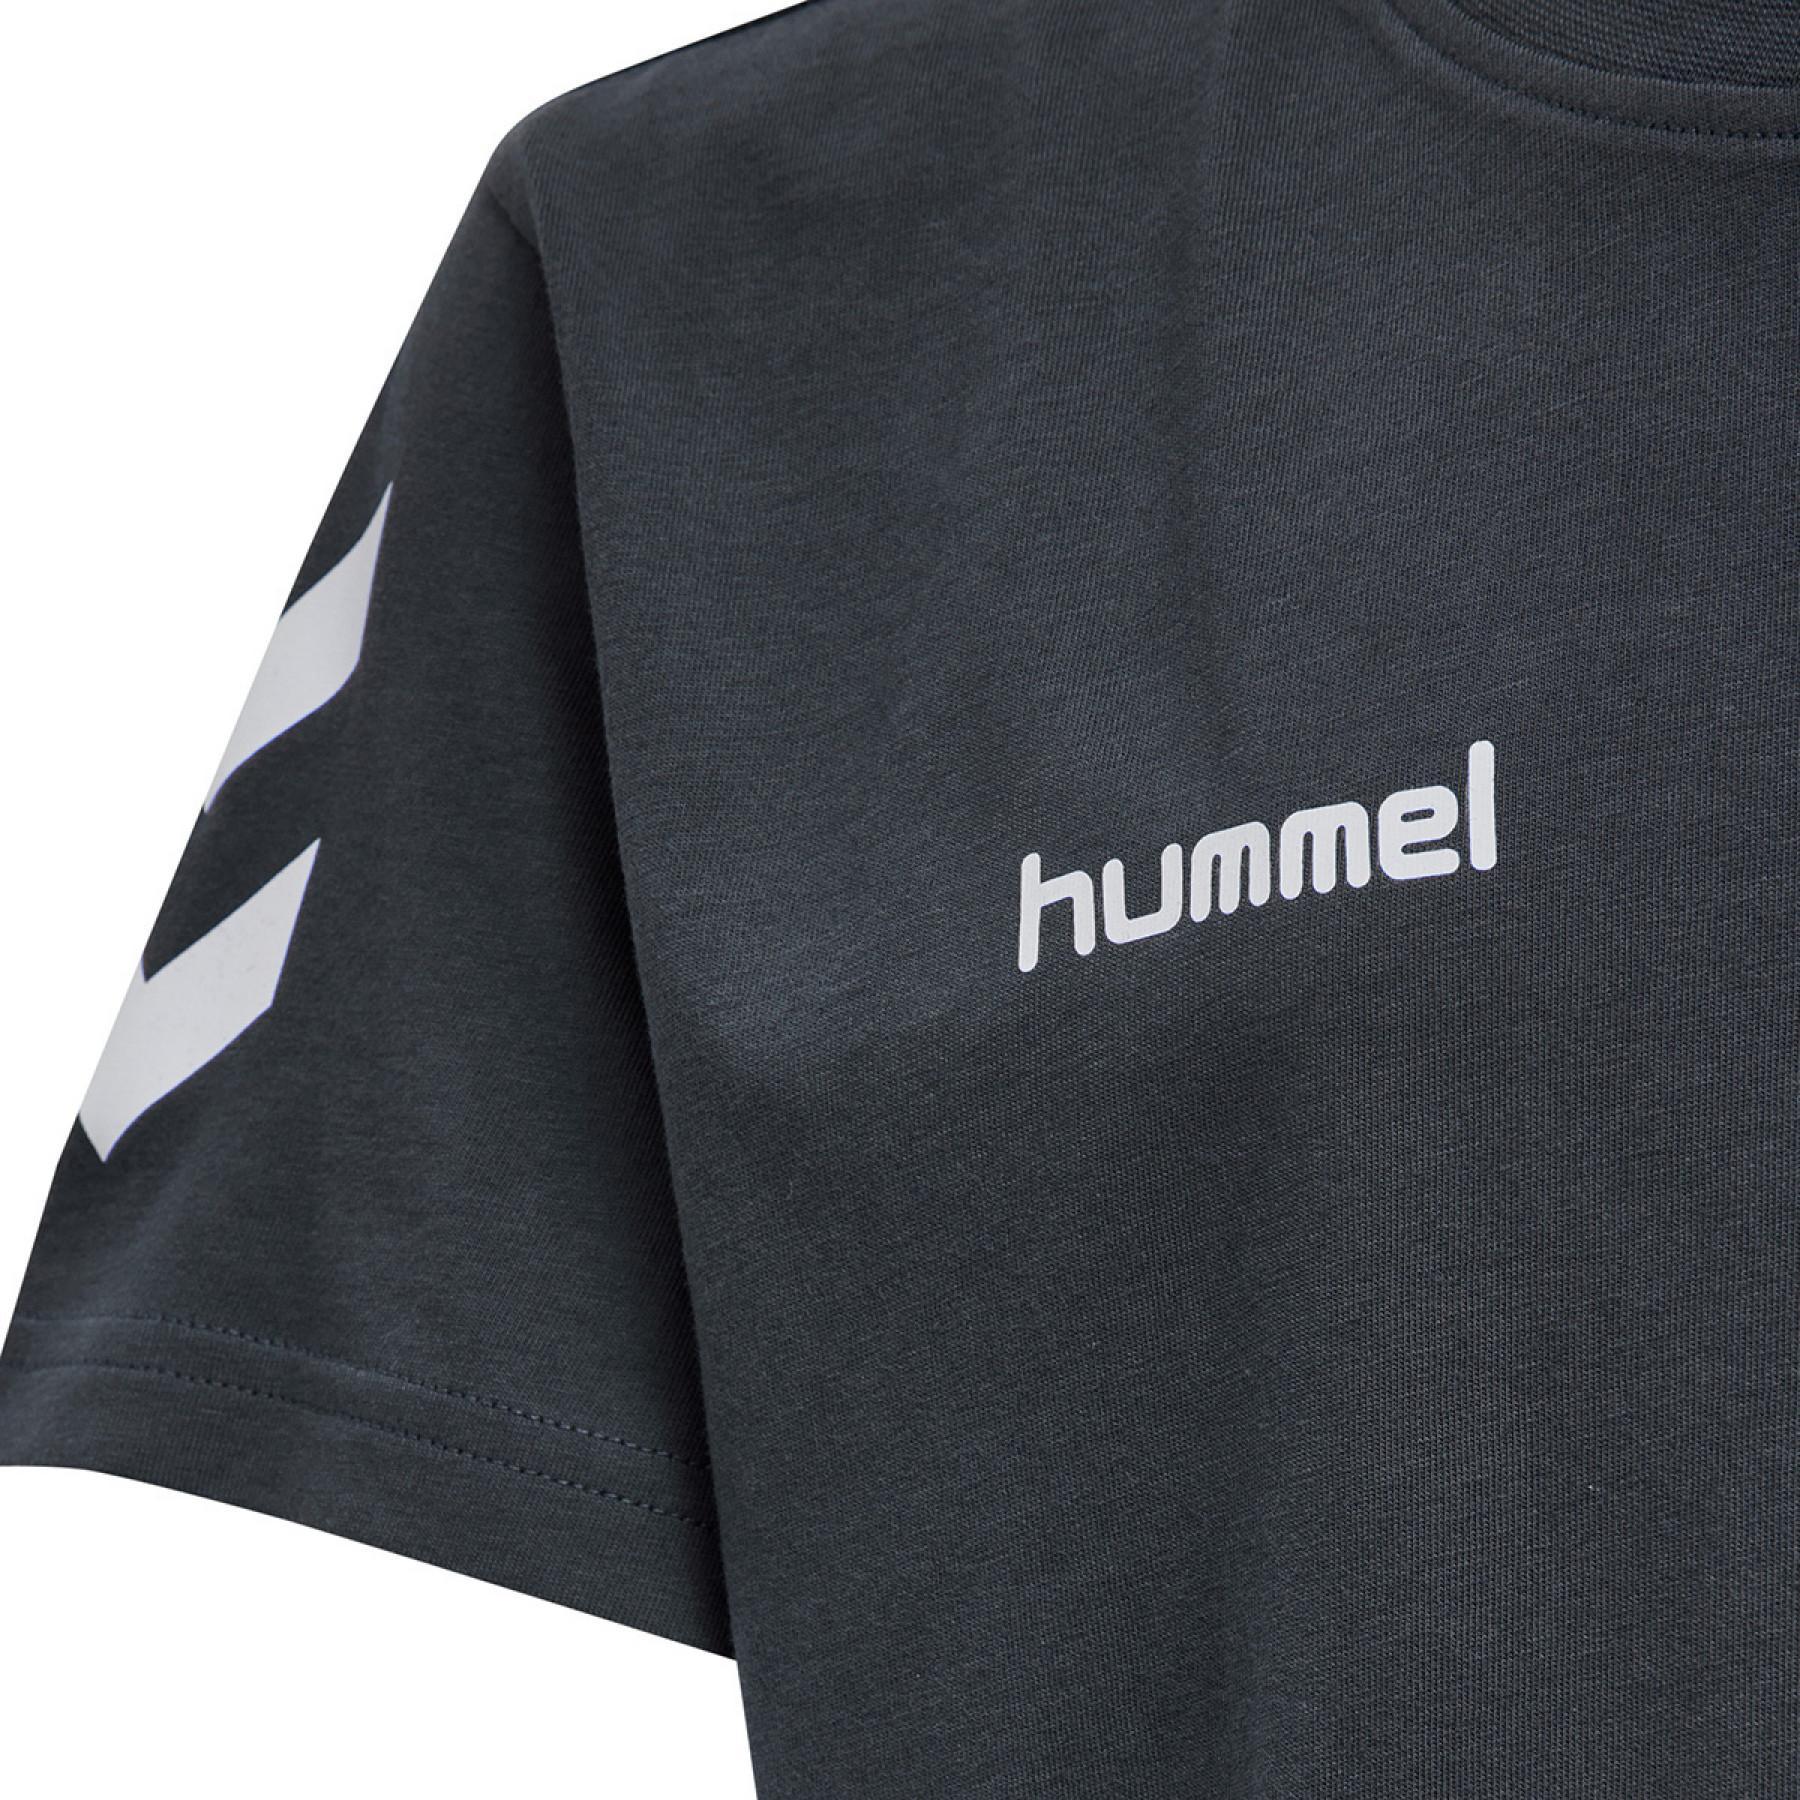 Junior T-shirt Hummel Textile polos T-shirts wear Handball and - - - Hmlgo